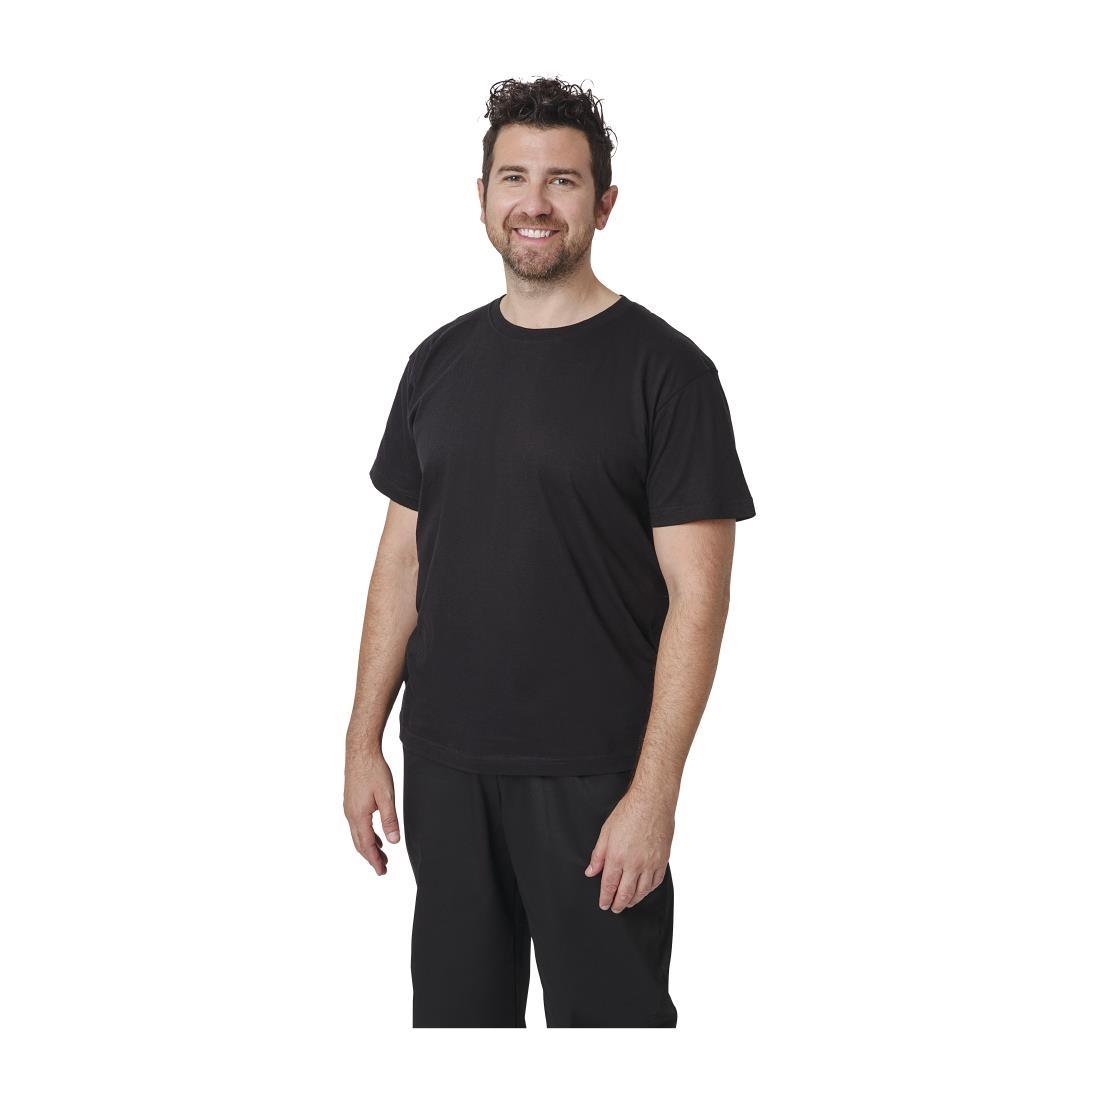 Unisex Chef T-Shirt Black XL - A295-XL  - 1